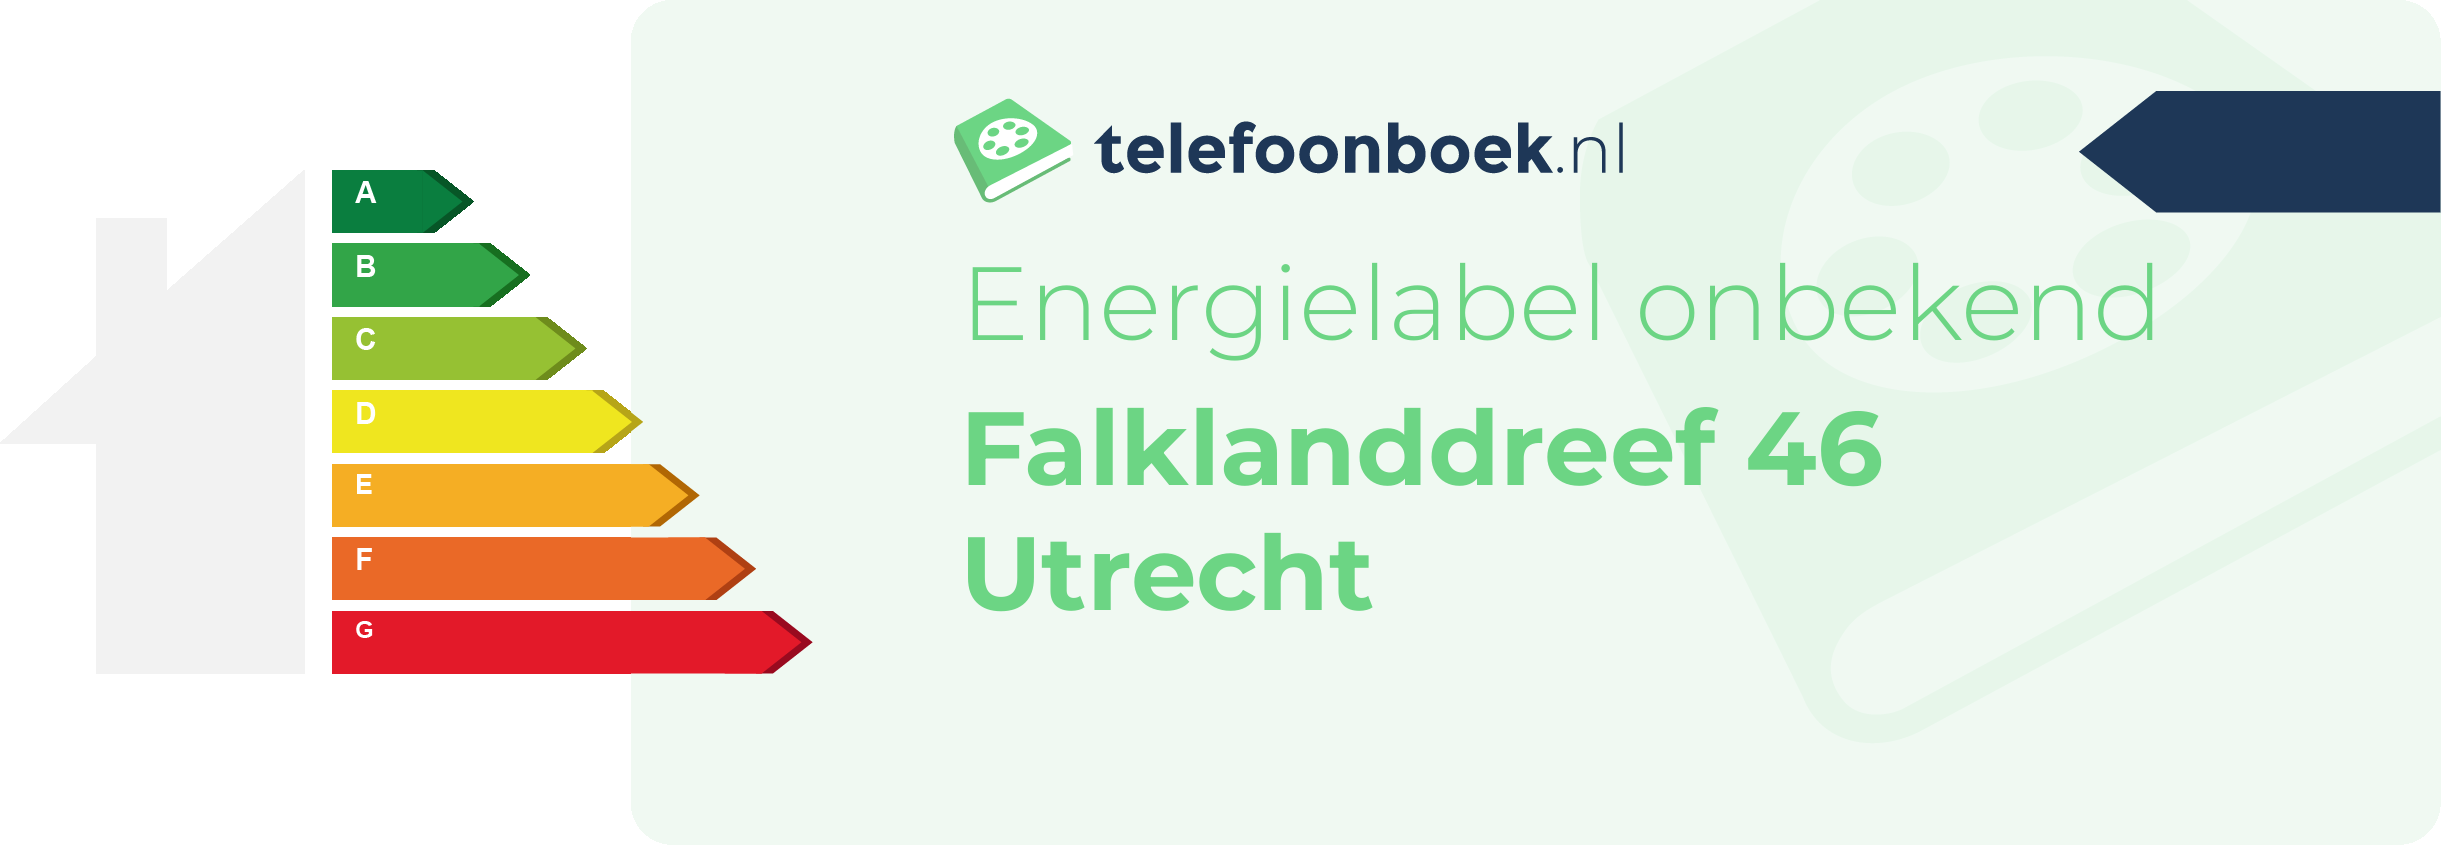 Energielabel Falklanddreef 46 Utrecht